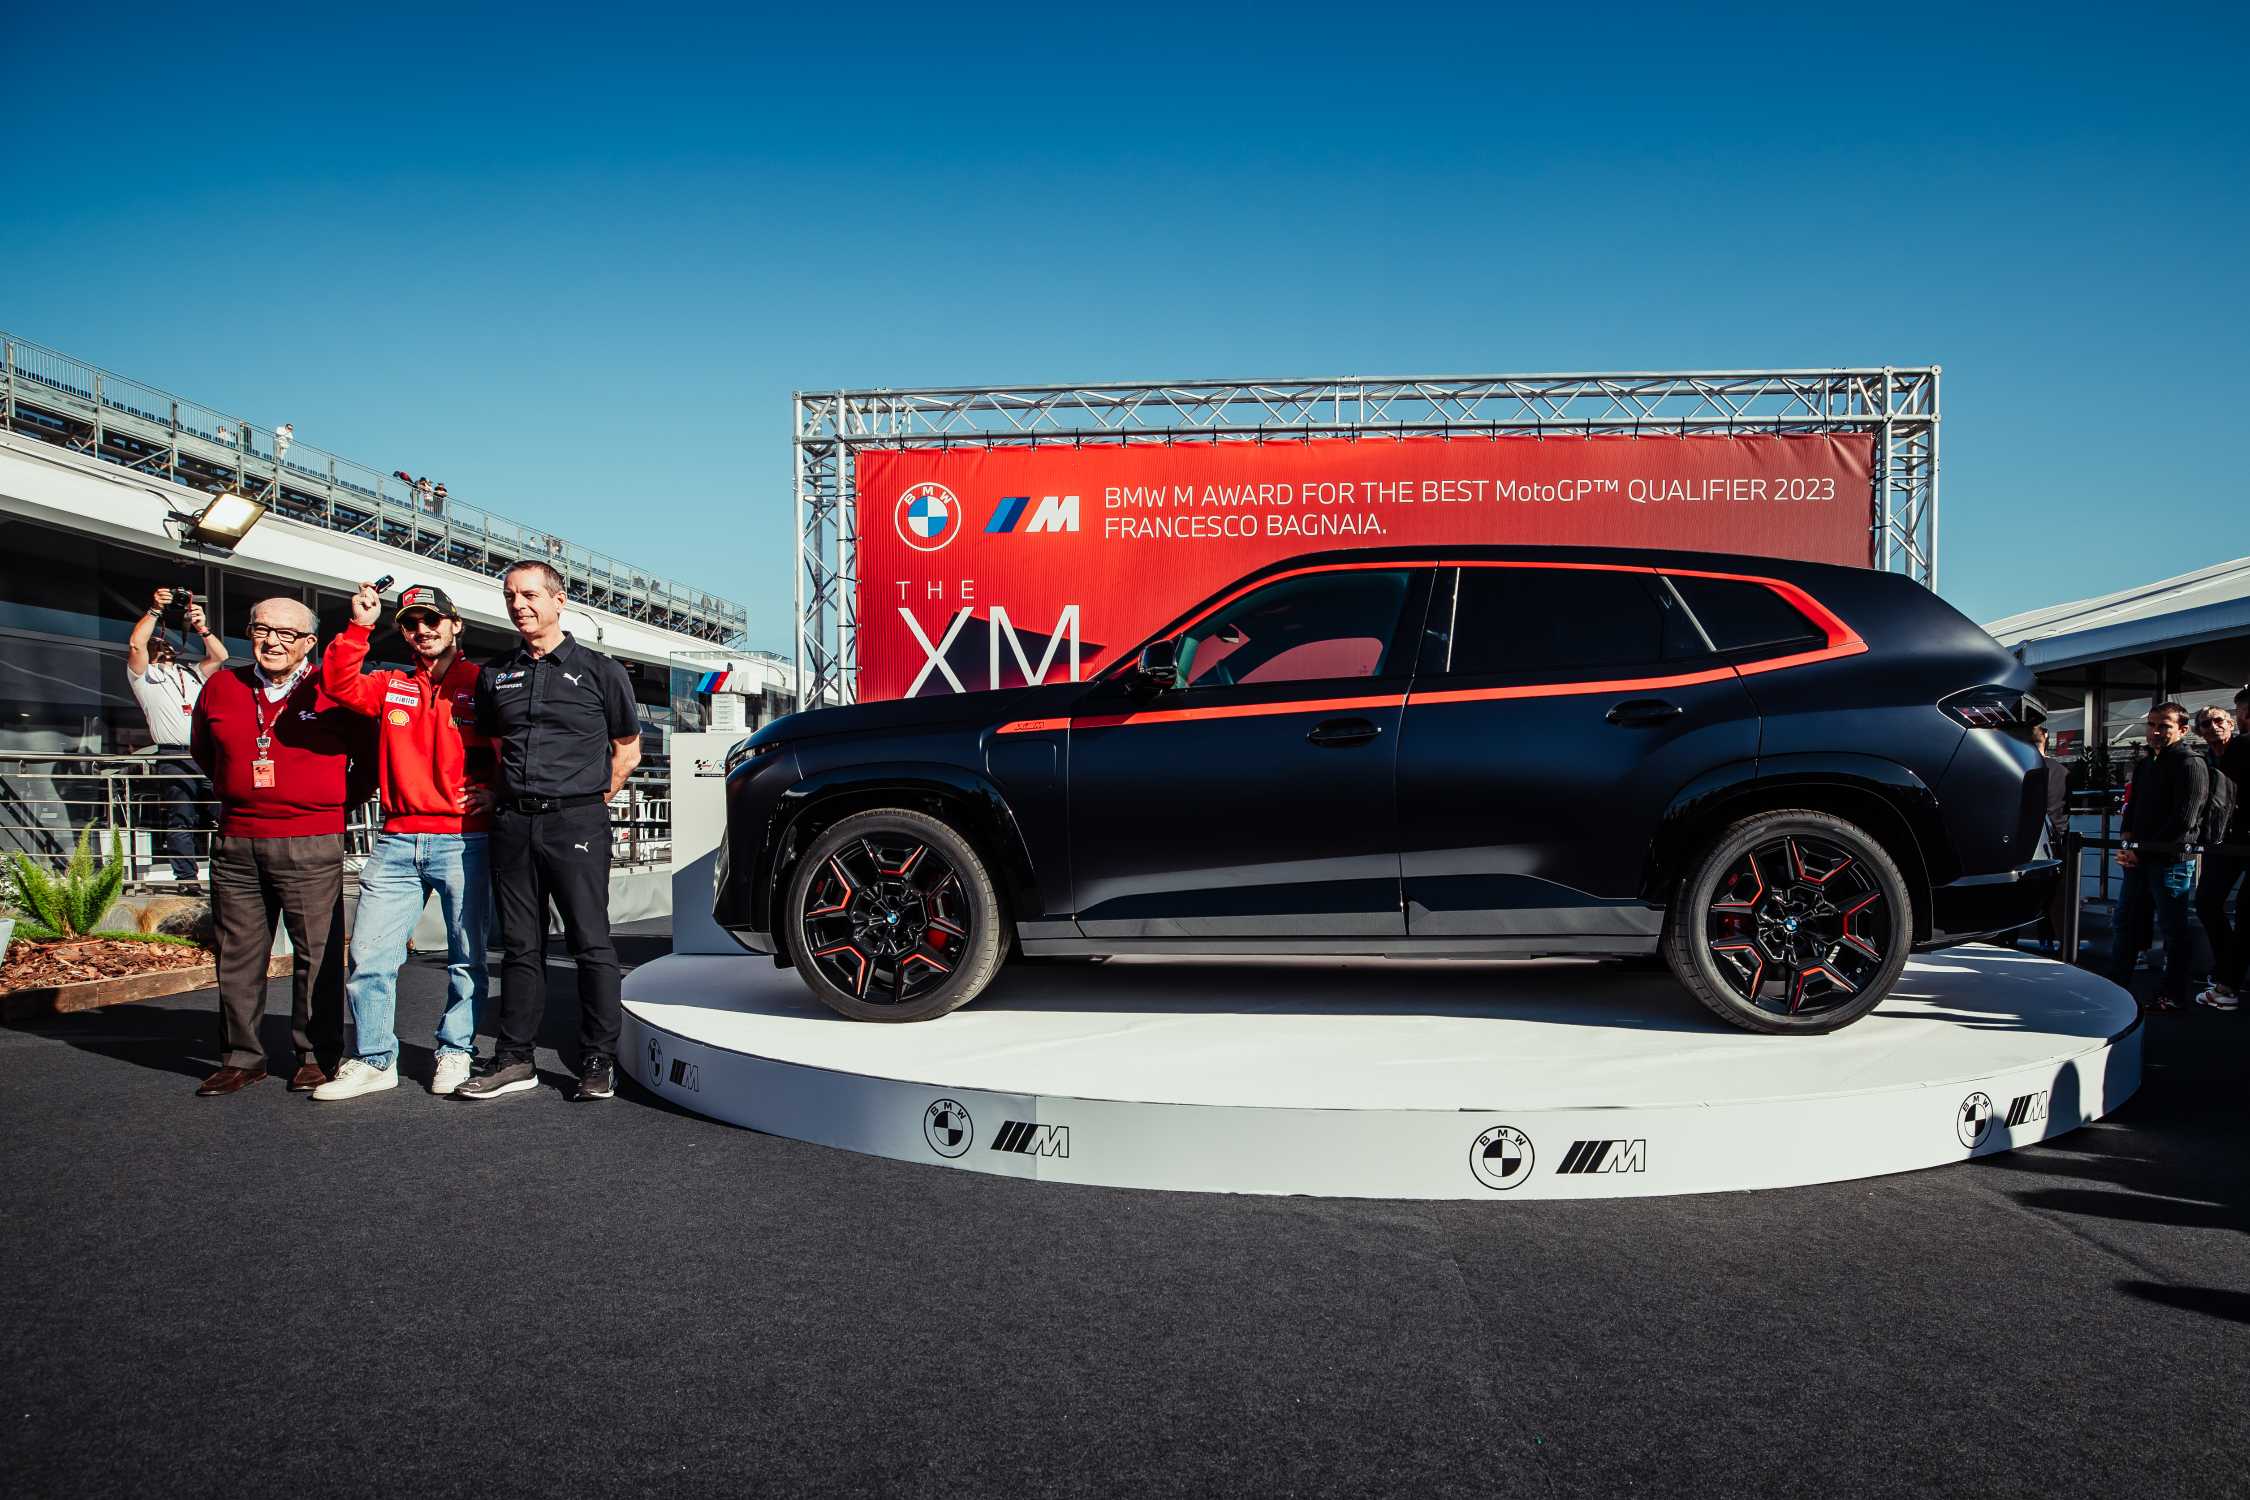 Francesco Bagnaia vuelve a ganar el BMW M Award al presentar el nuevo BMW XM Label Red Safety Car.